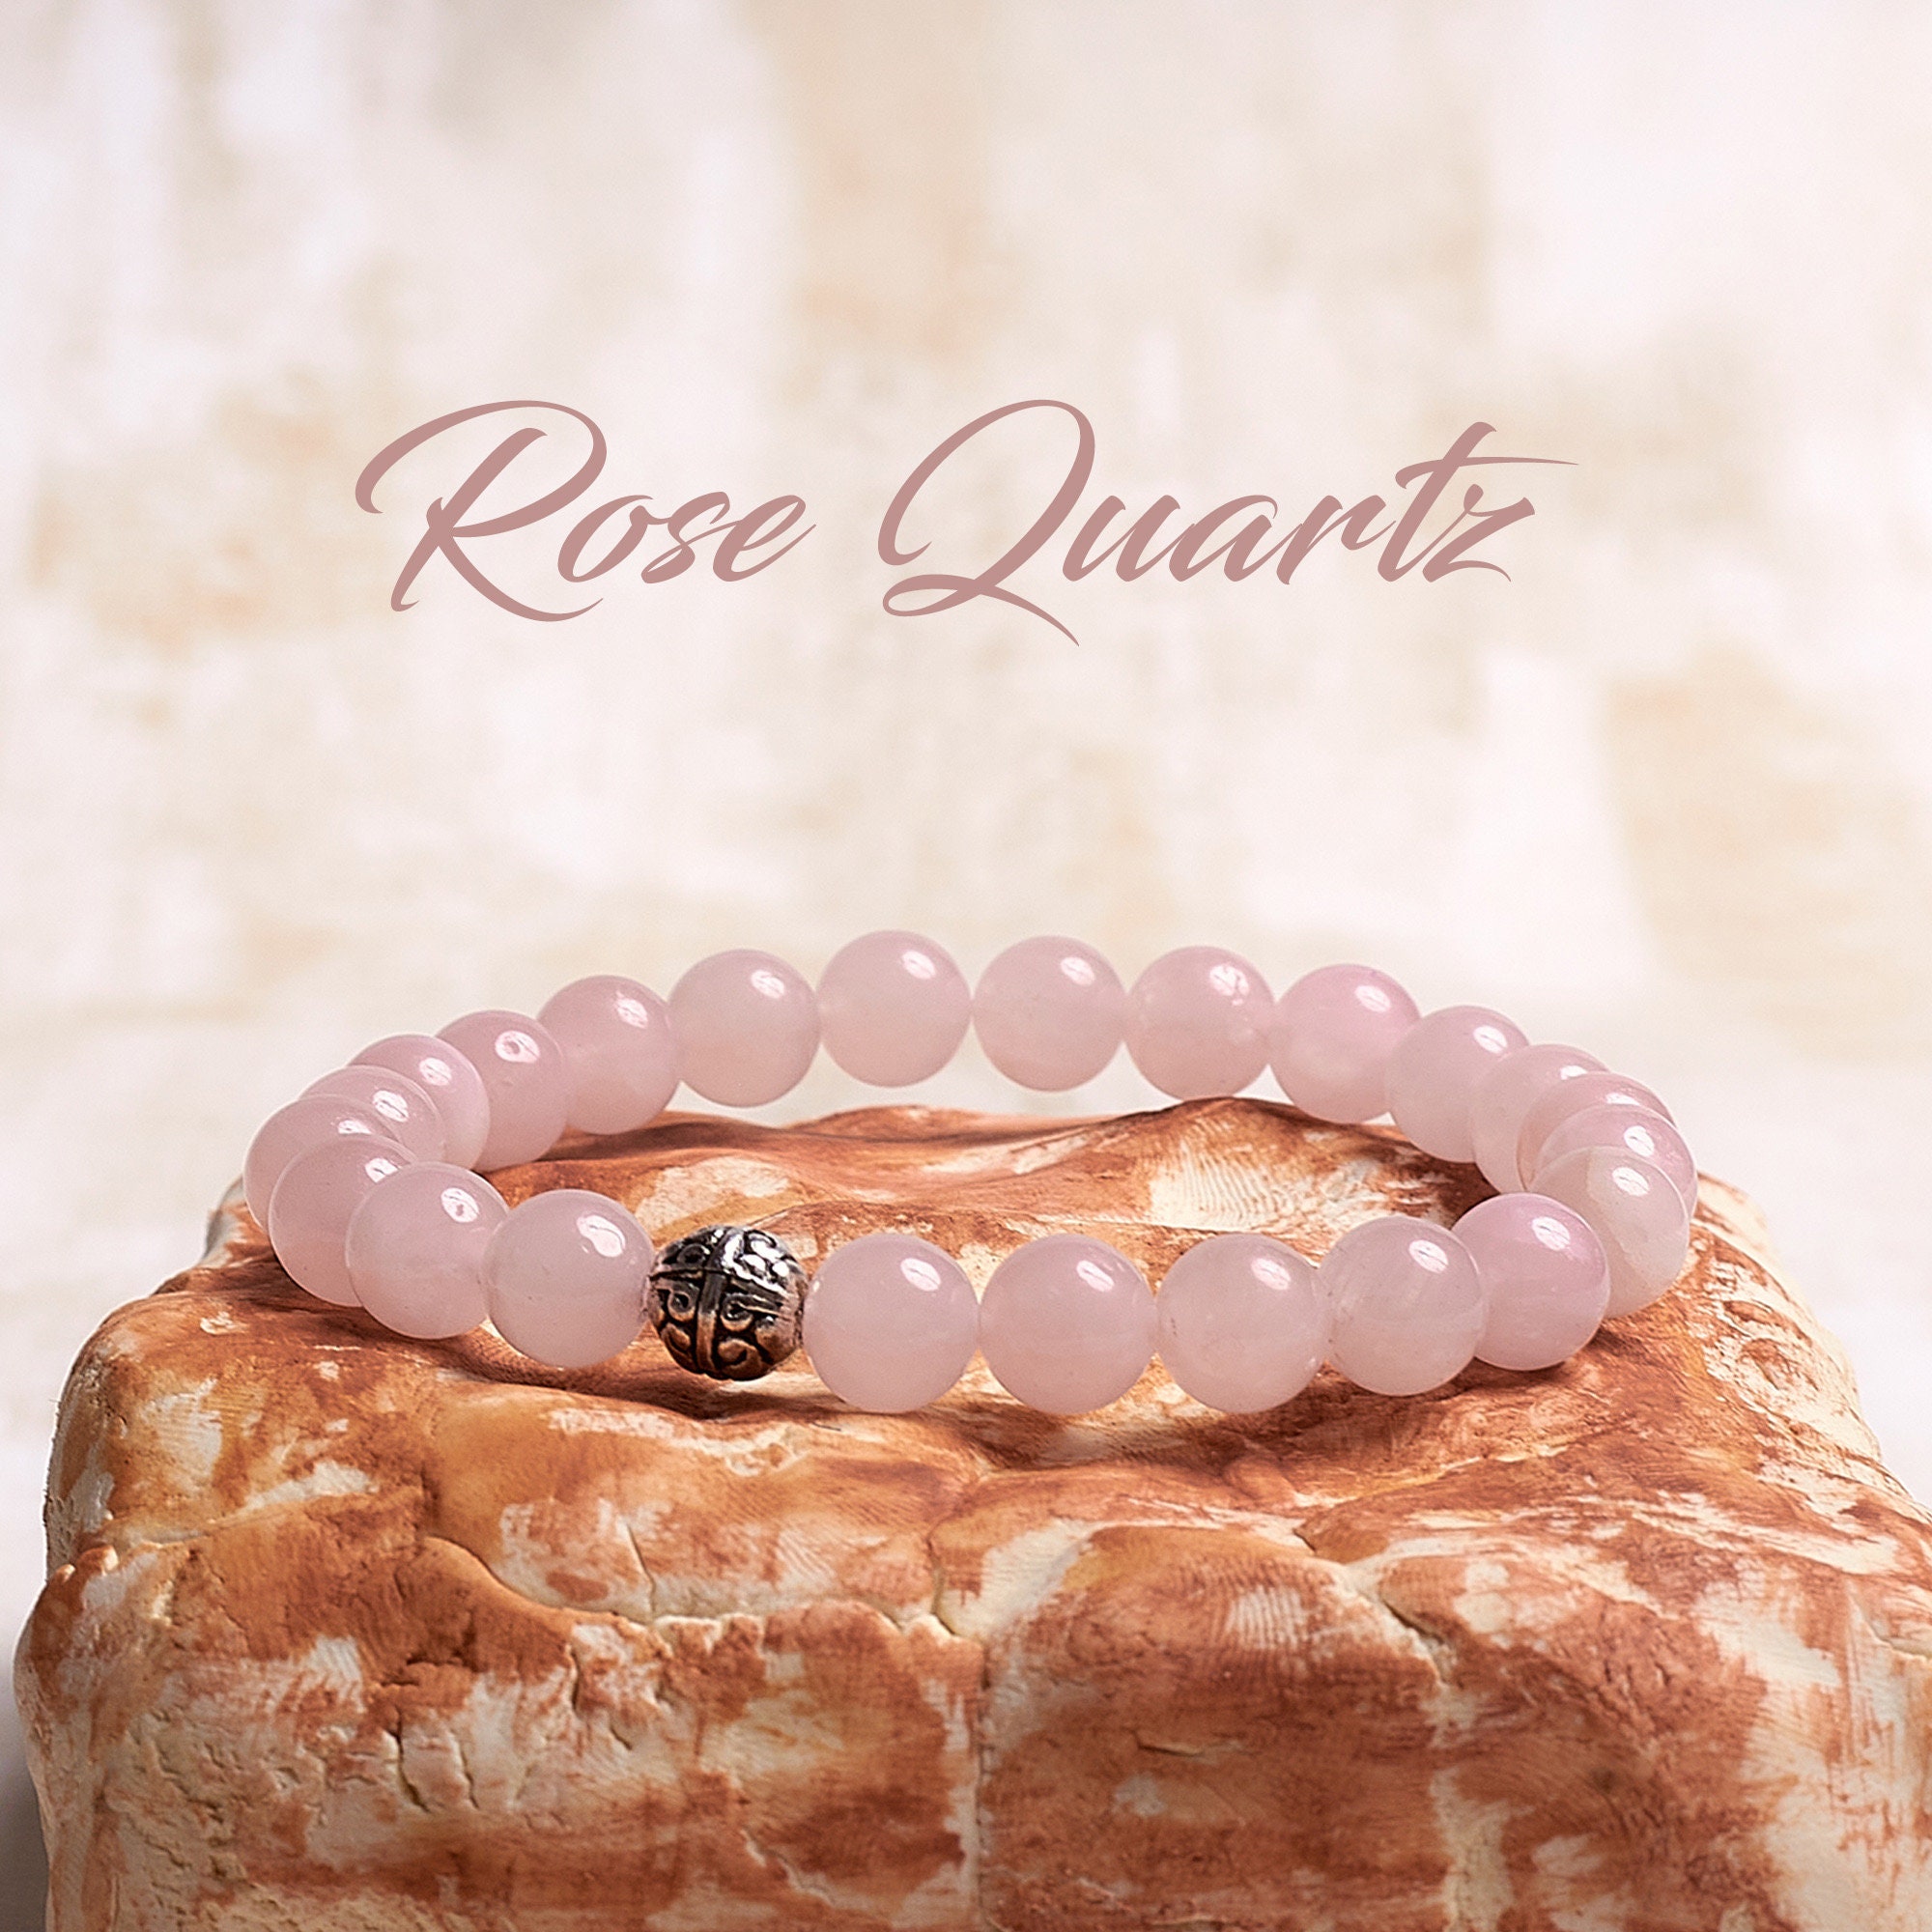 Buy Strawberry Quartz Crystal Bracelet Pink Red Bracelets for Women Chip  Beads Beaded Bracelet Handmade Jewelry Healing Crystal Online in India -  Etsy